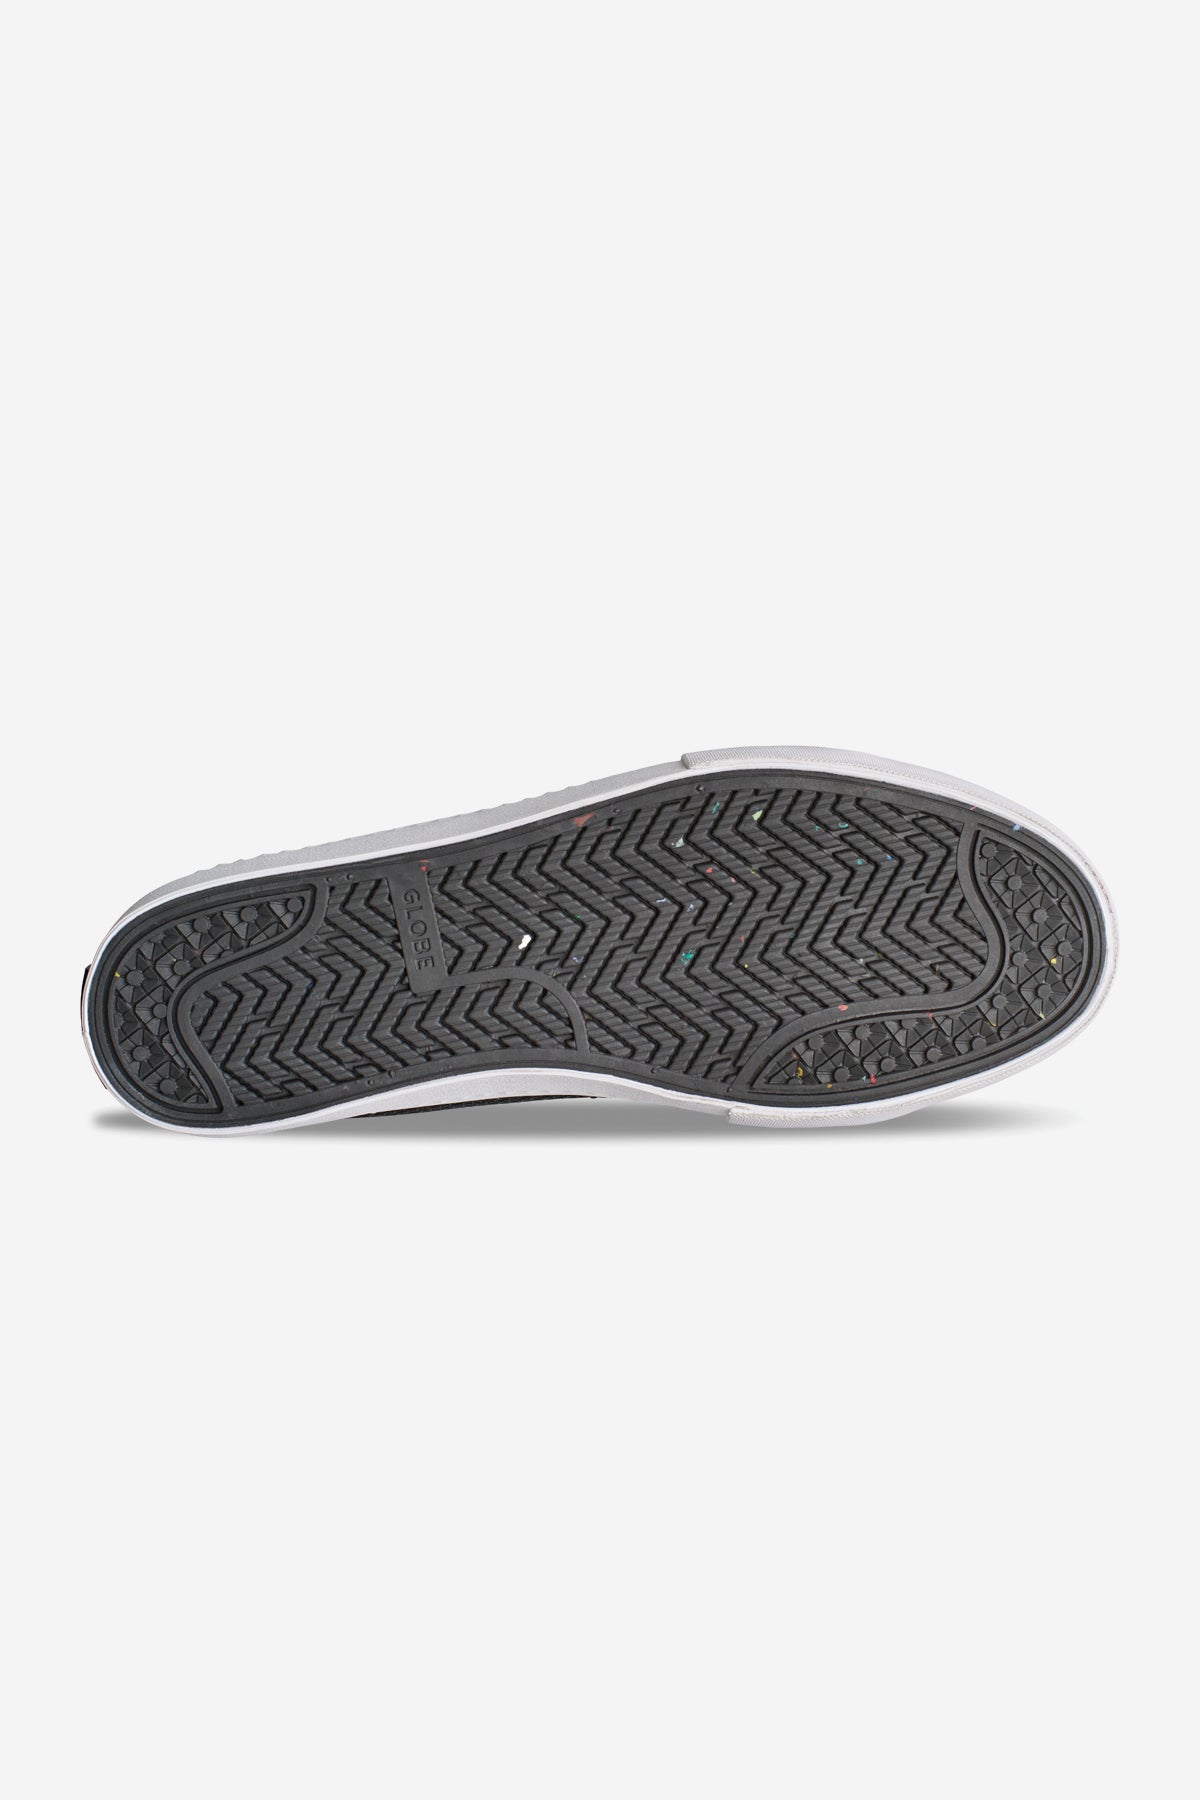 la knit nero white skateboard  scarpe